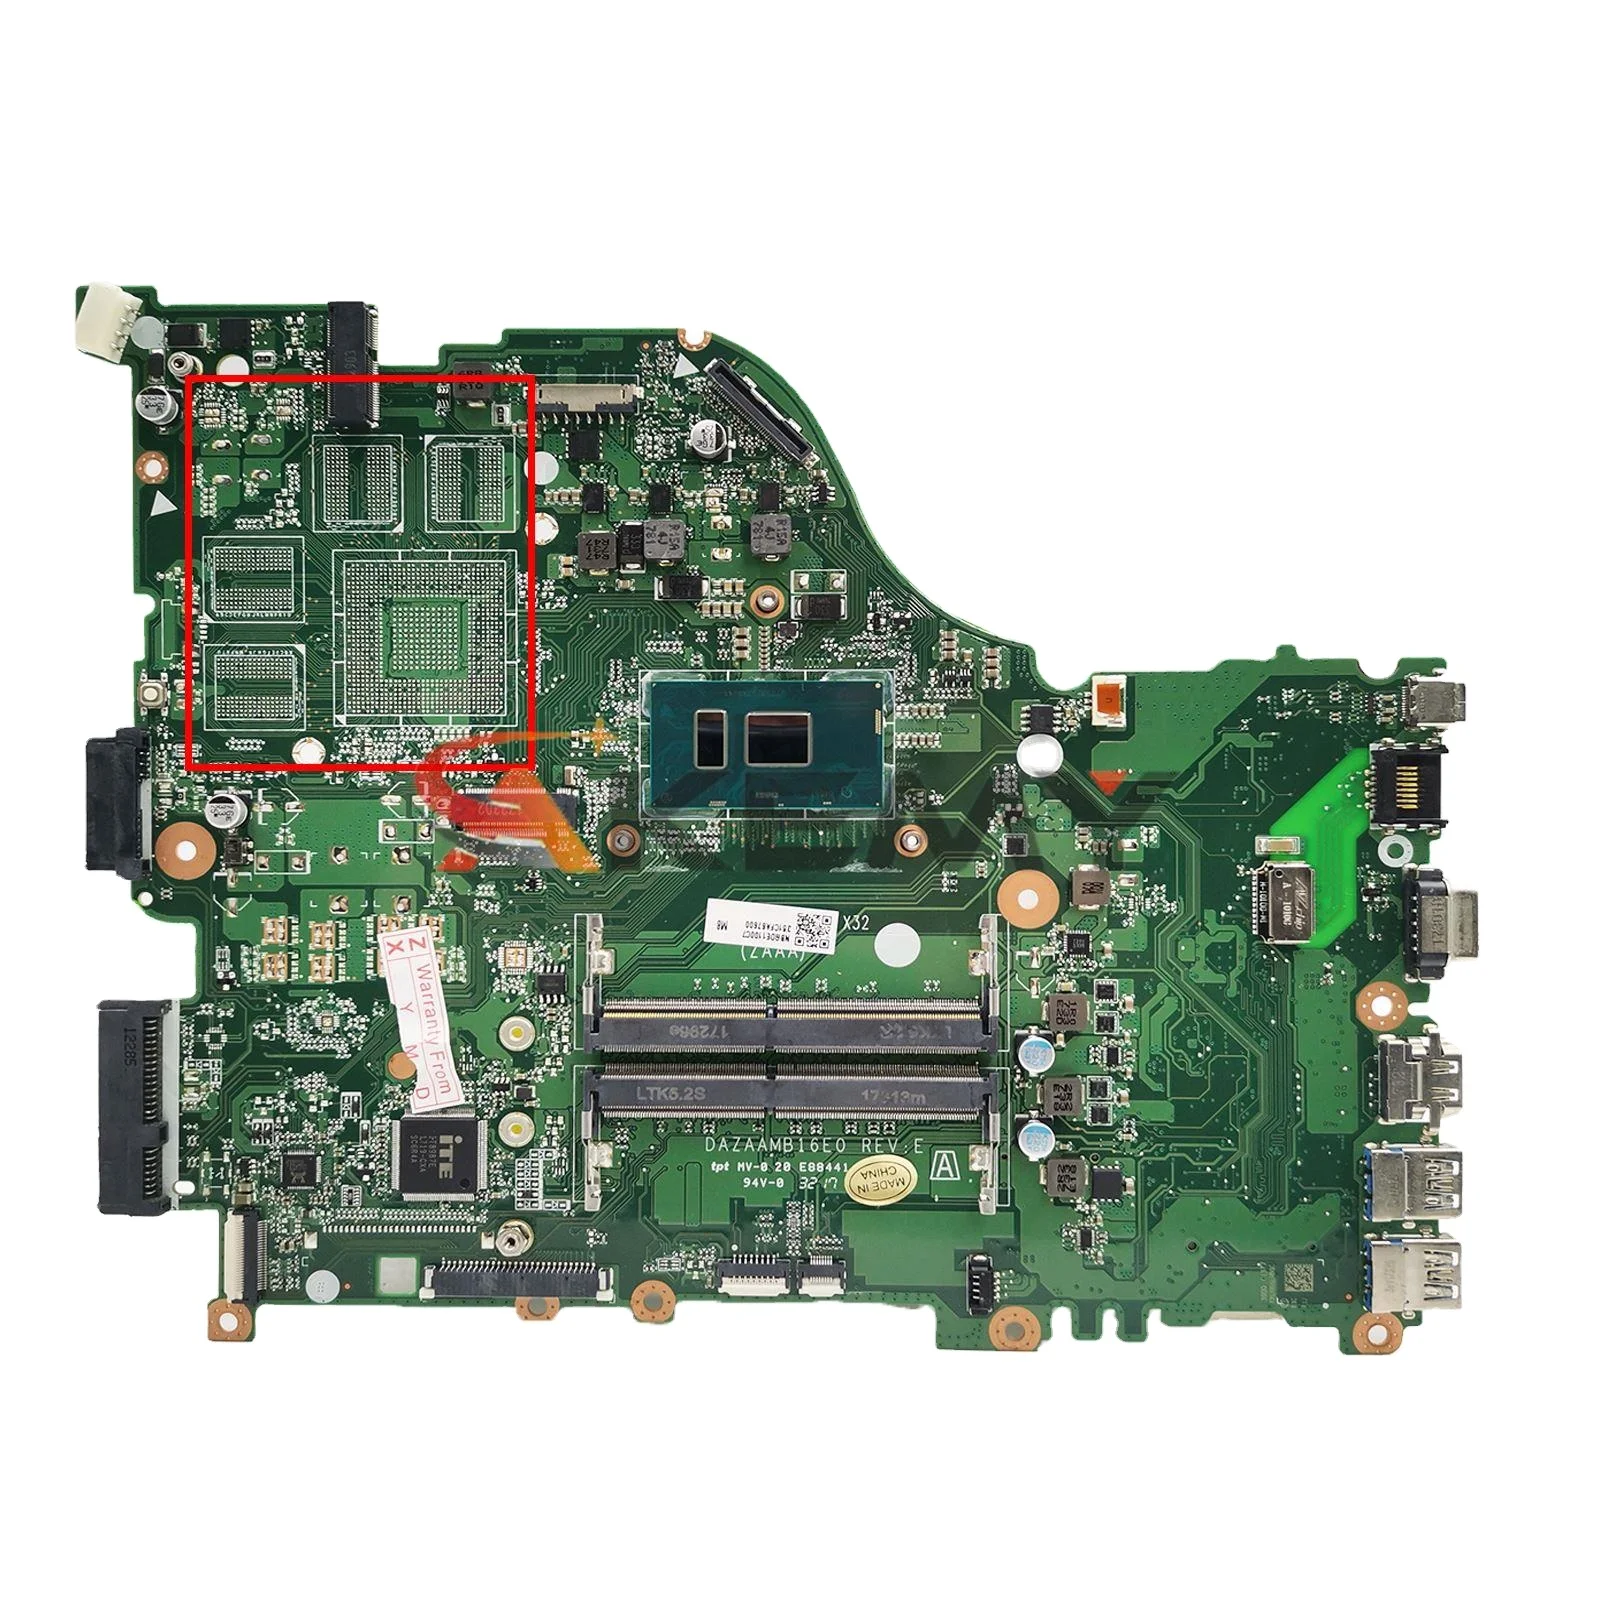 

ZAA X32 DAZAAMB16E0 Motherboard for ACER Aspire E15 F5-573 F5 -573G E5-574TG Laptop mainboard E5-575 E5-575G With I3 I5 I7